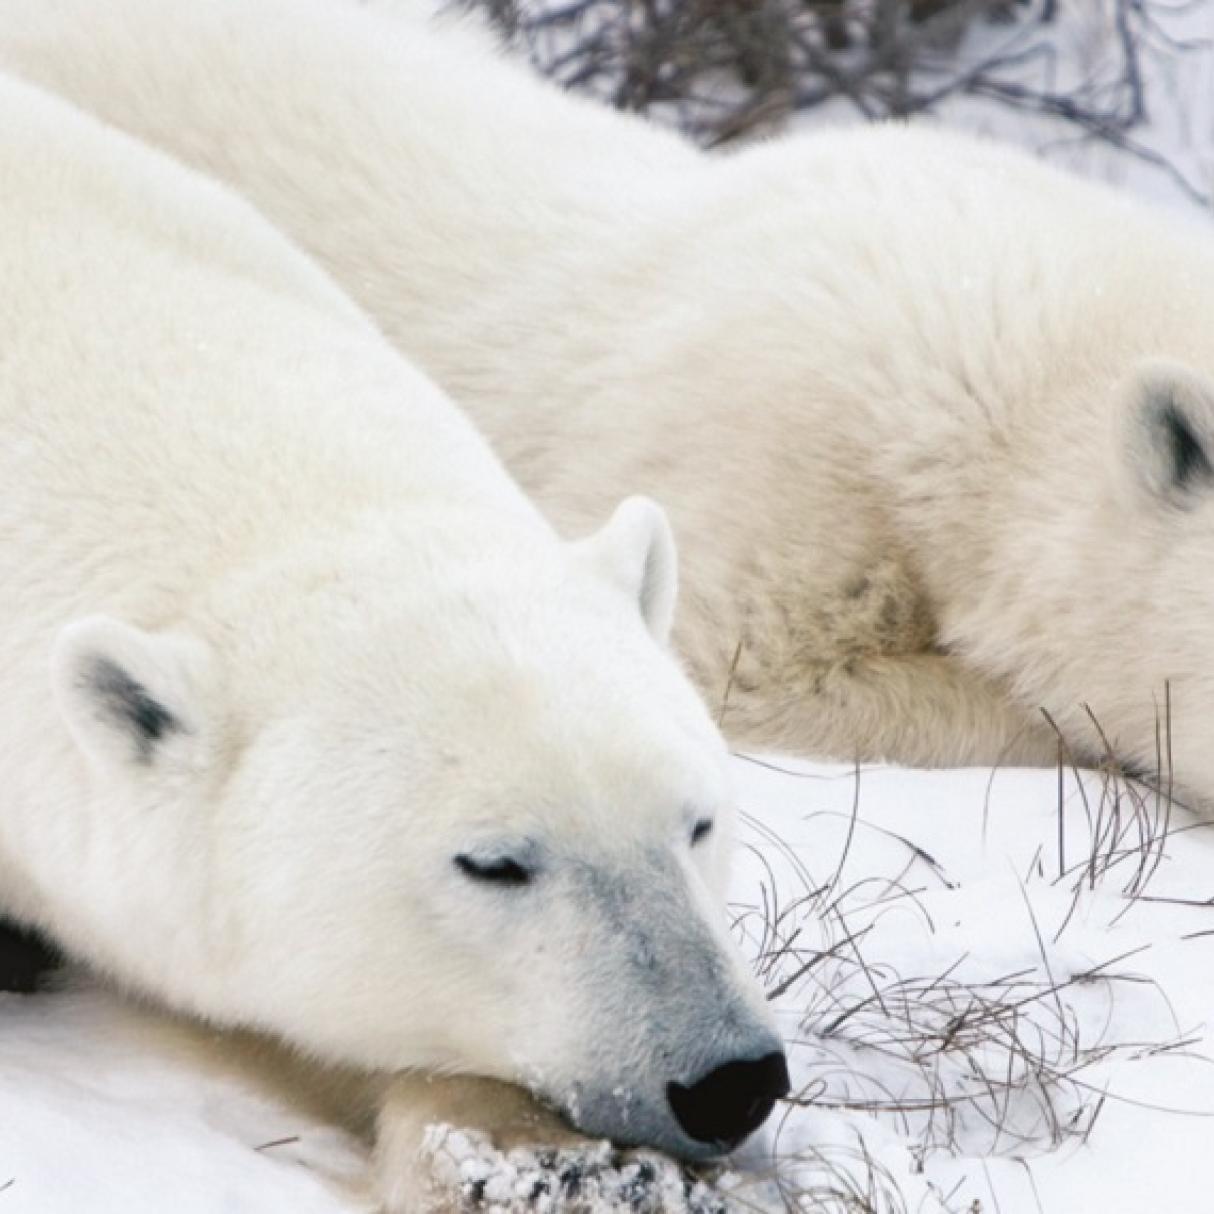 Polar bears sleeping